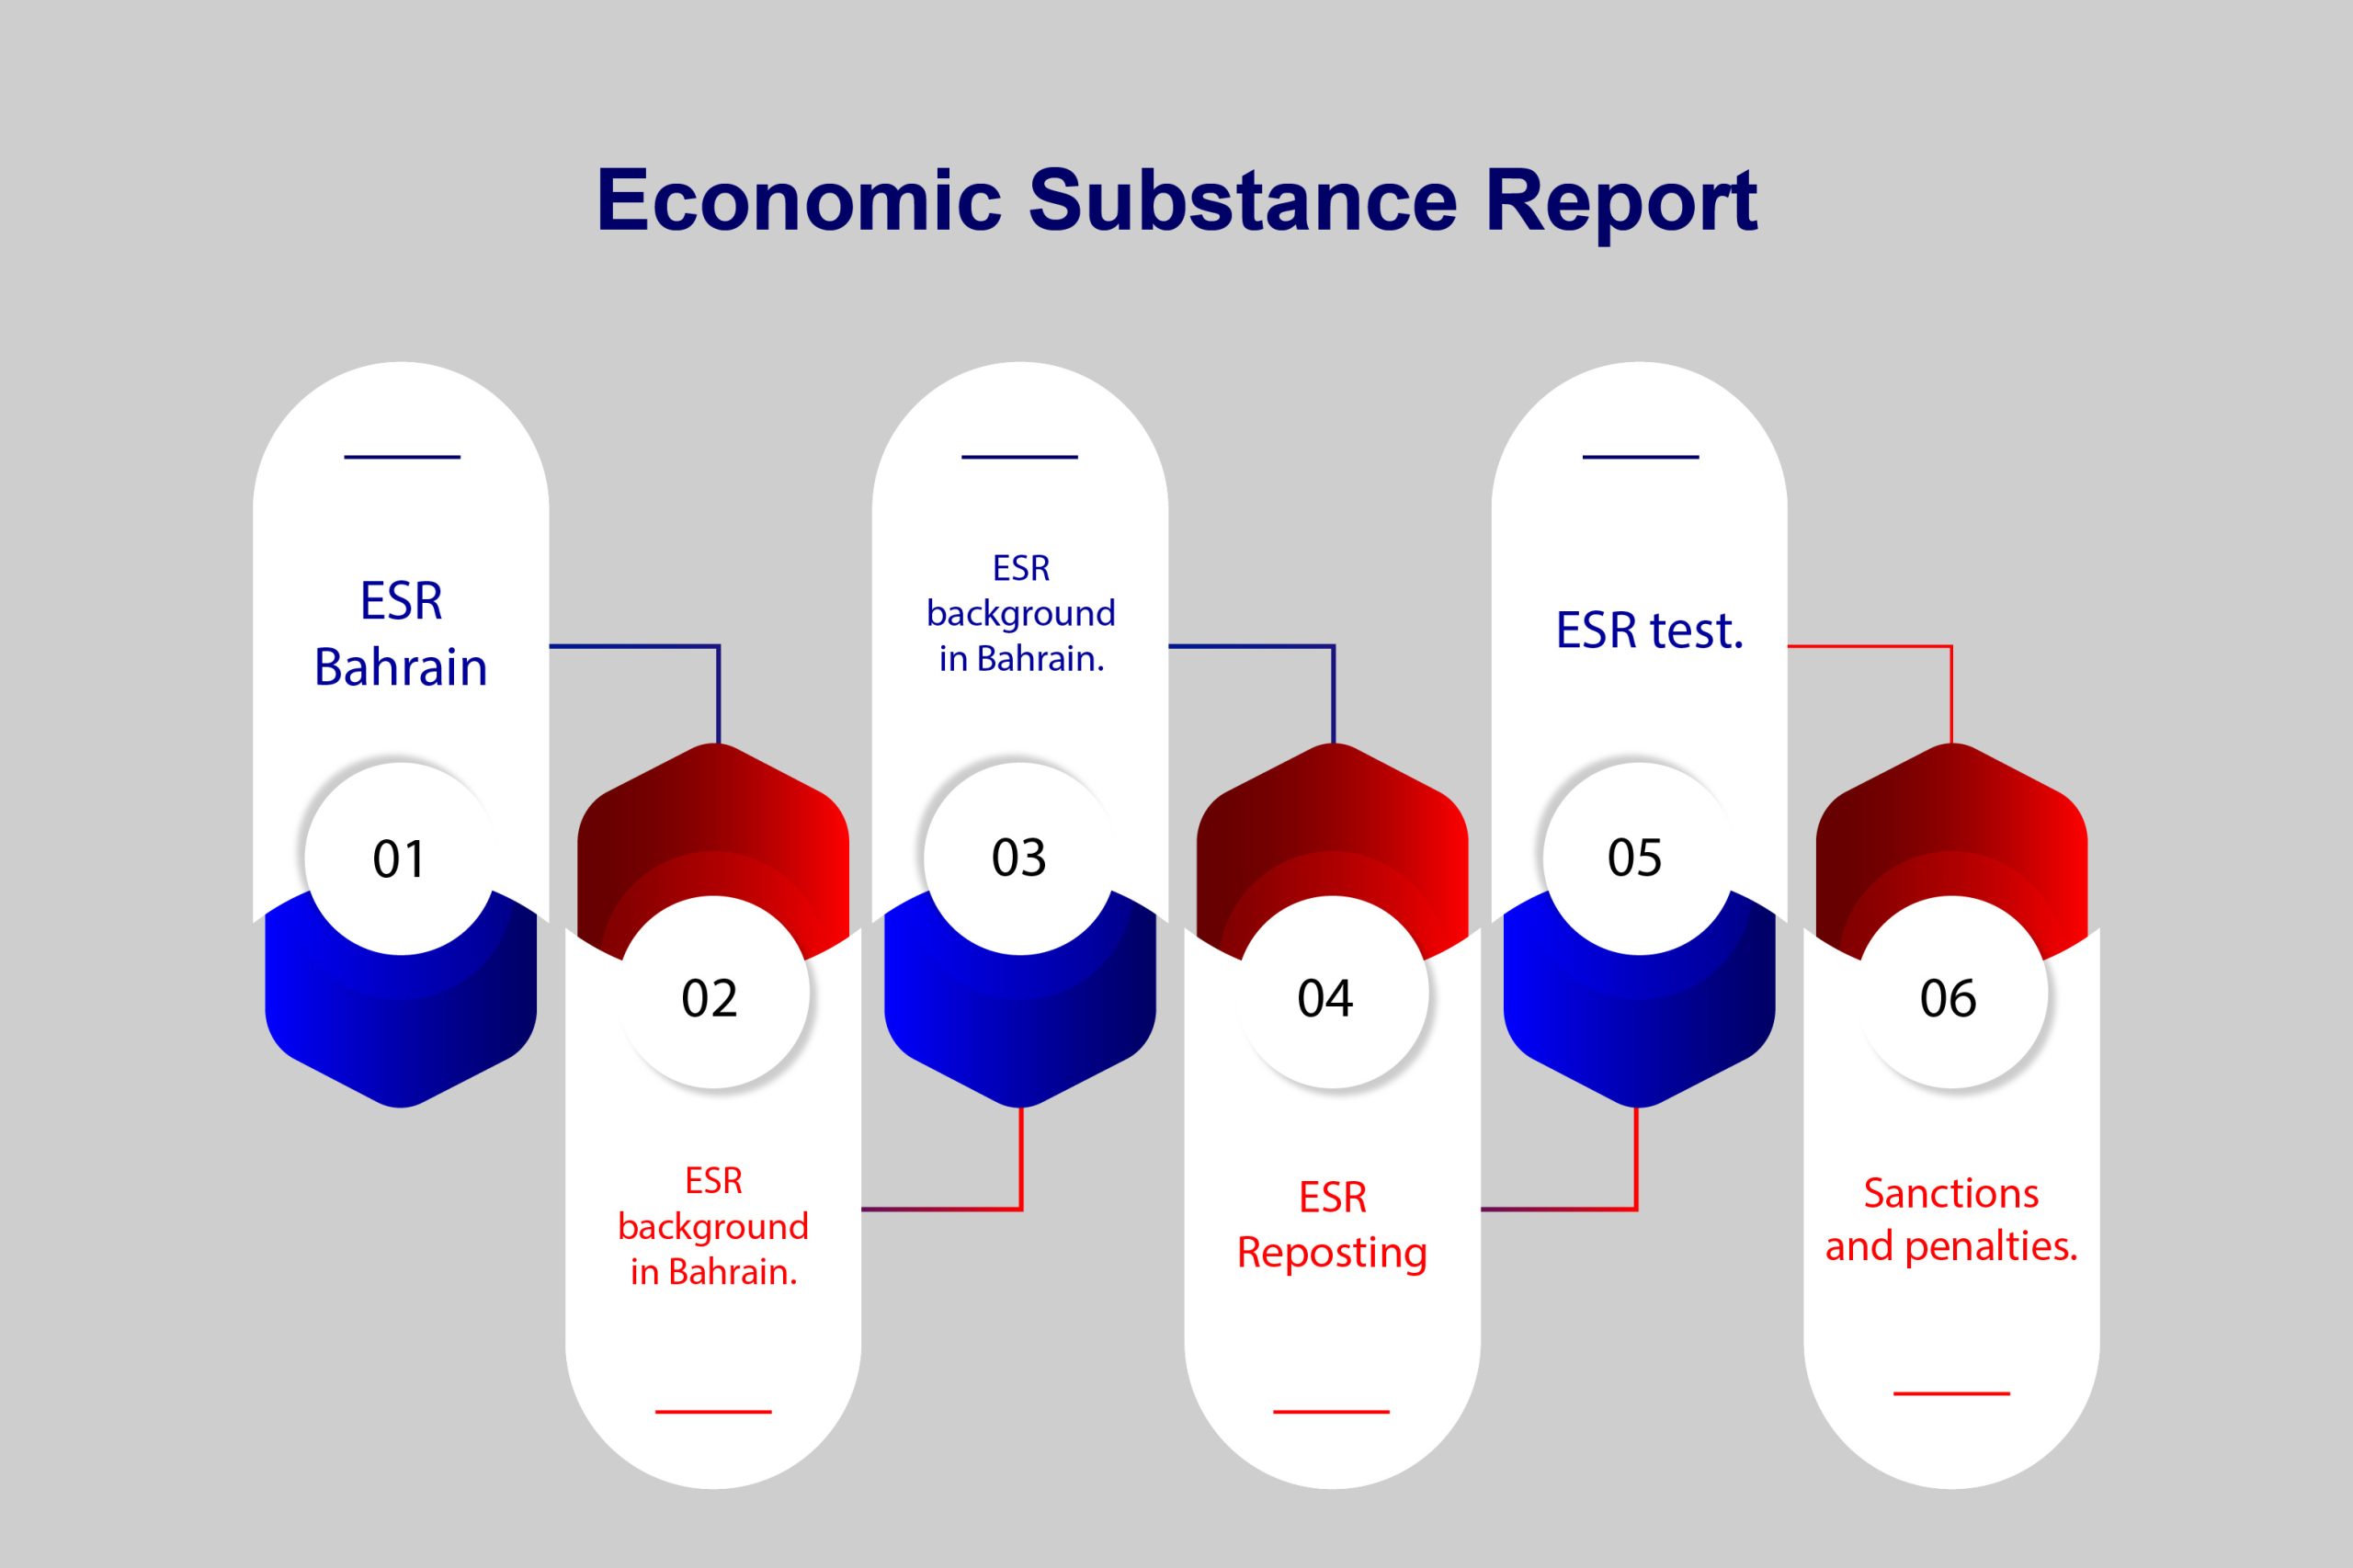 Economic Substances Regulations Esr In Bahrain